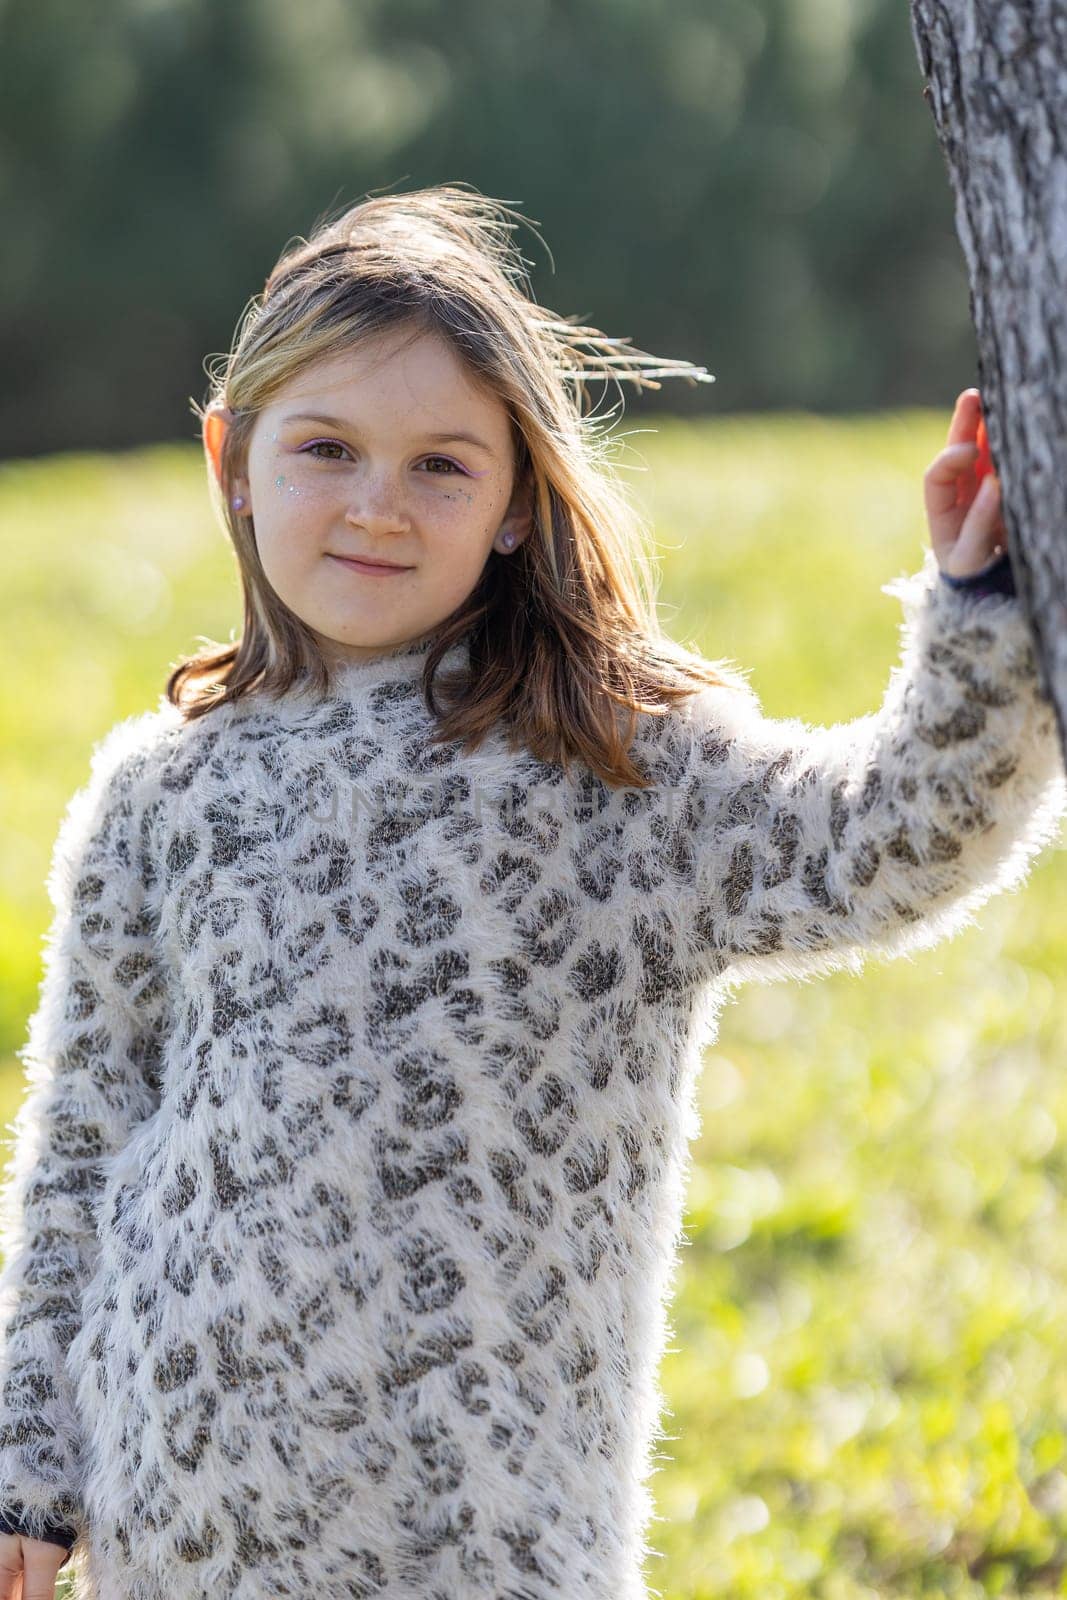 Beautiful little girl 7 years old in the summer park - portrait near tree